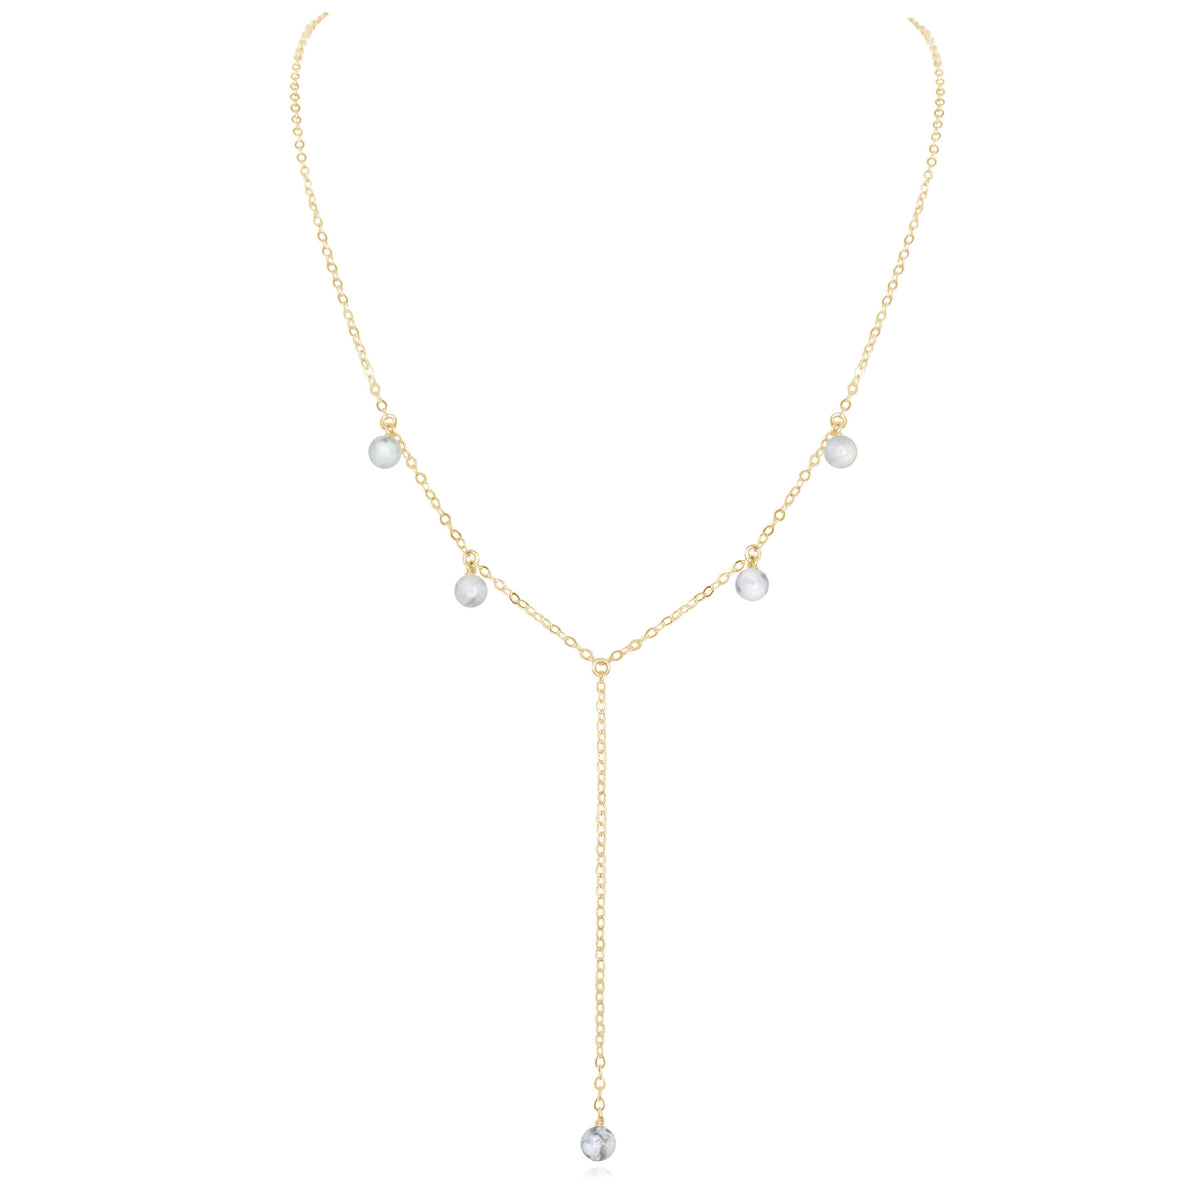 Boho Y Necklace - Howlite - 14K Gold Fill - Luna Tide Handmade Jewellery